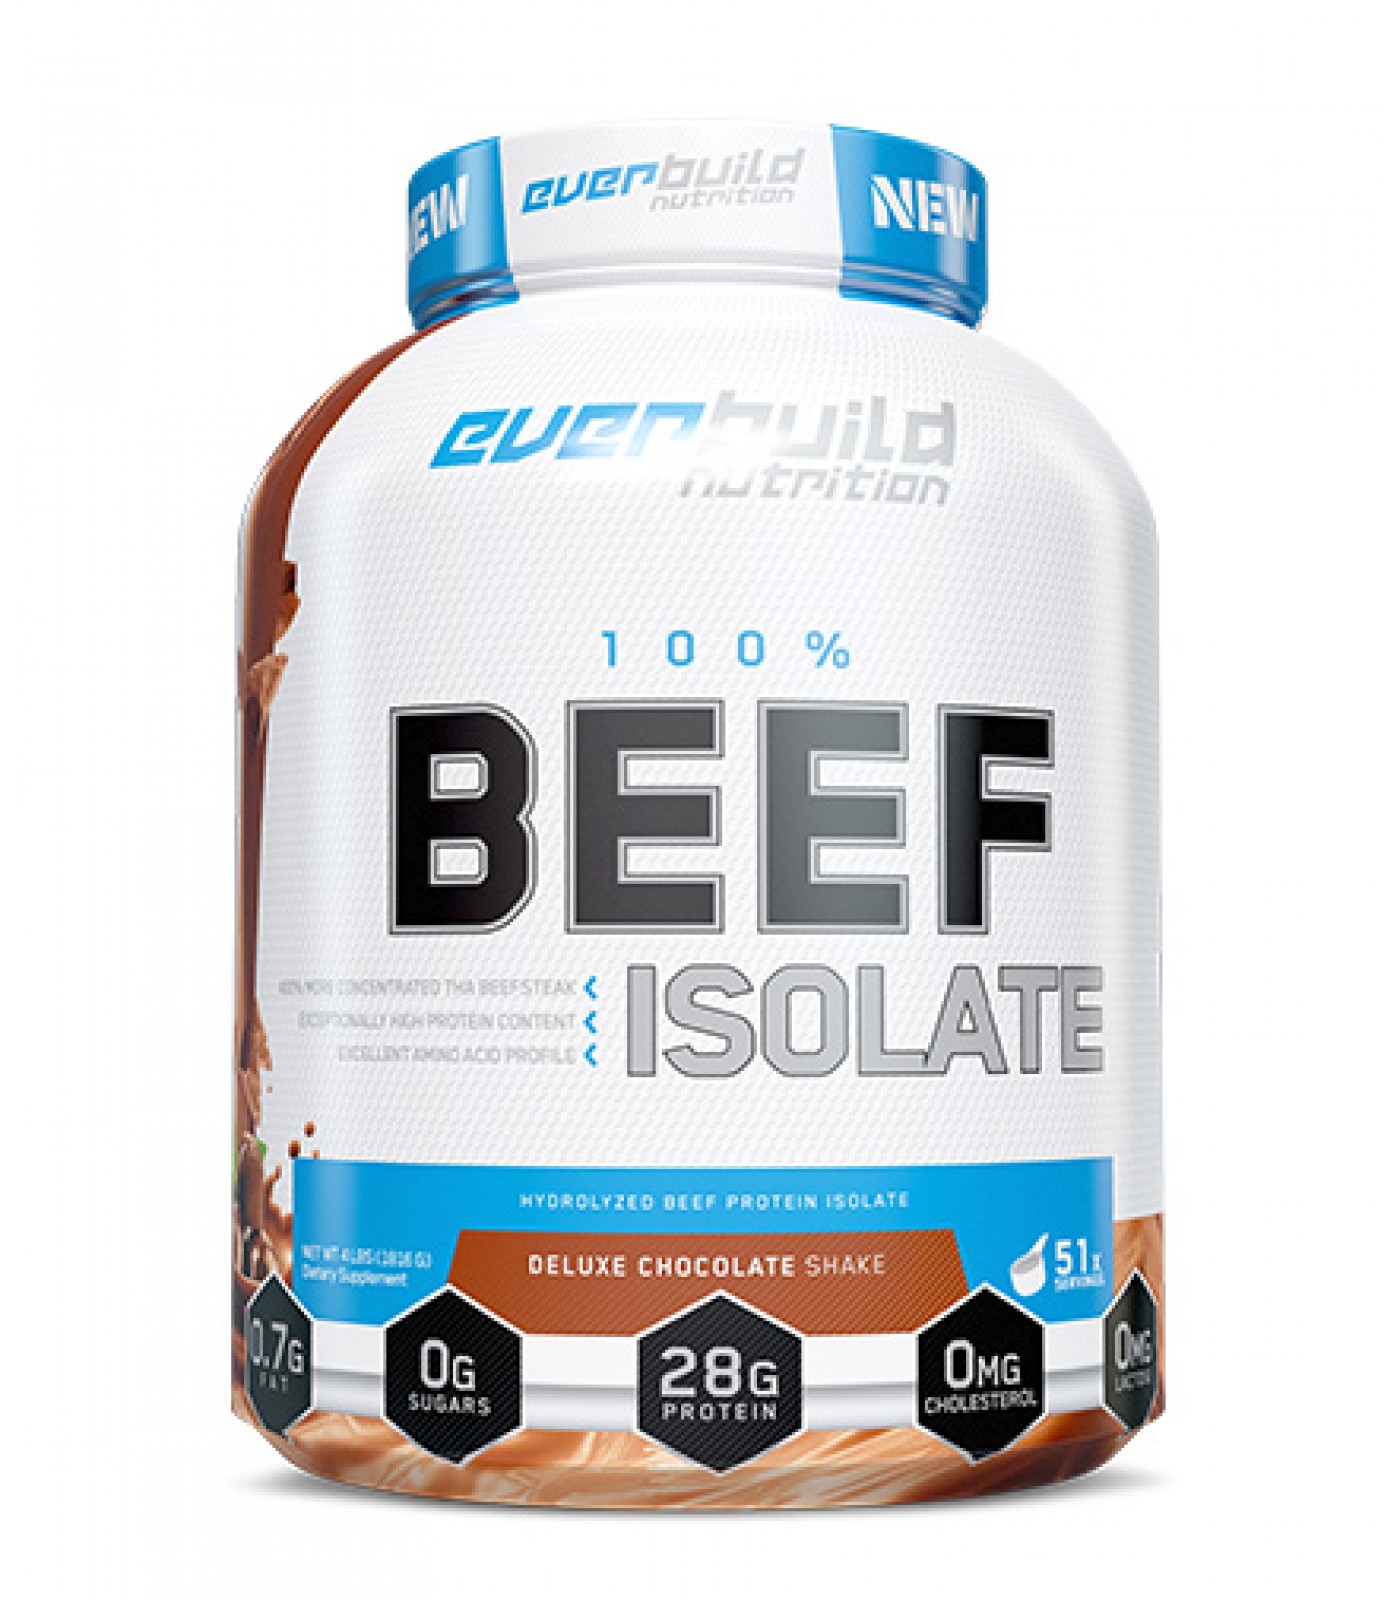 EVERBUILD - Ultra Premium 100% Beef Isolate / 2lbs.